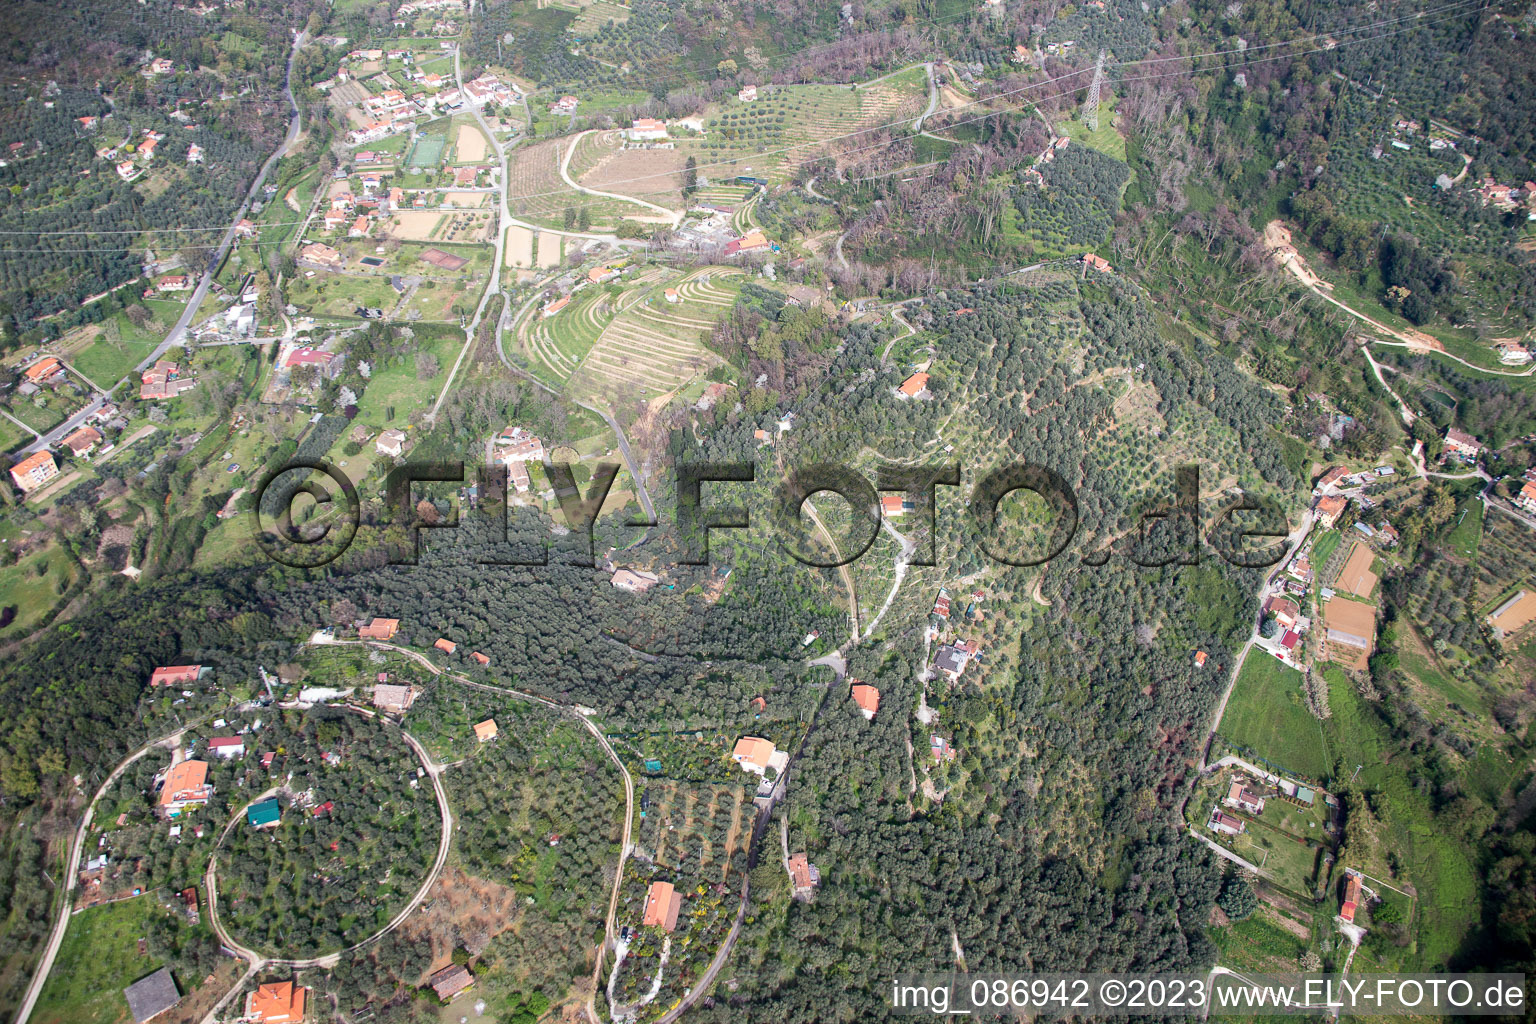 Luftbild von Valdicastello(I-Toskana) im Bundesland Toscana, Italien